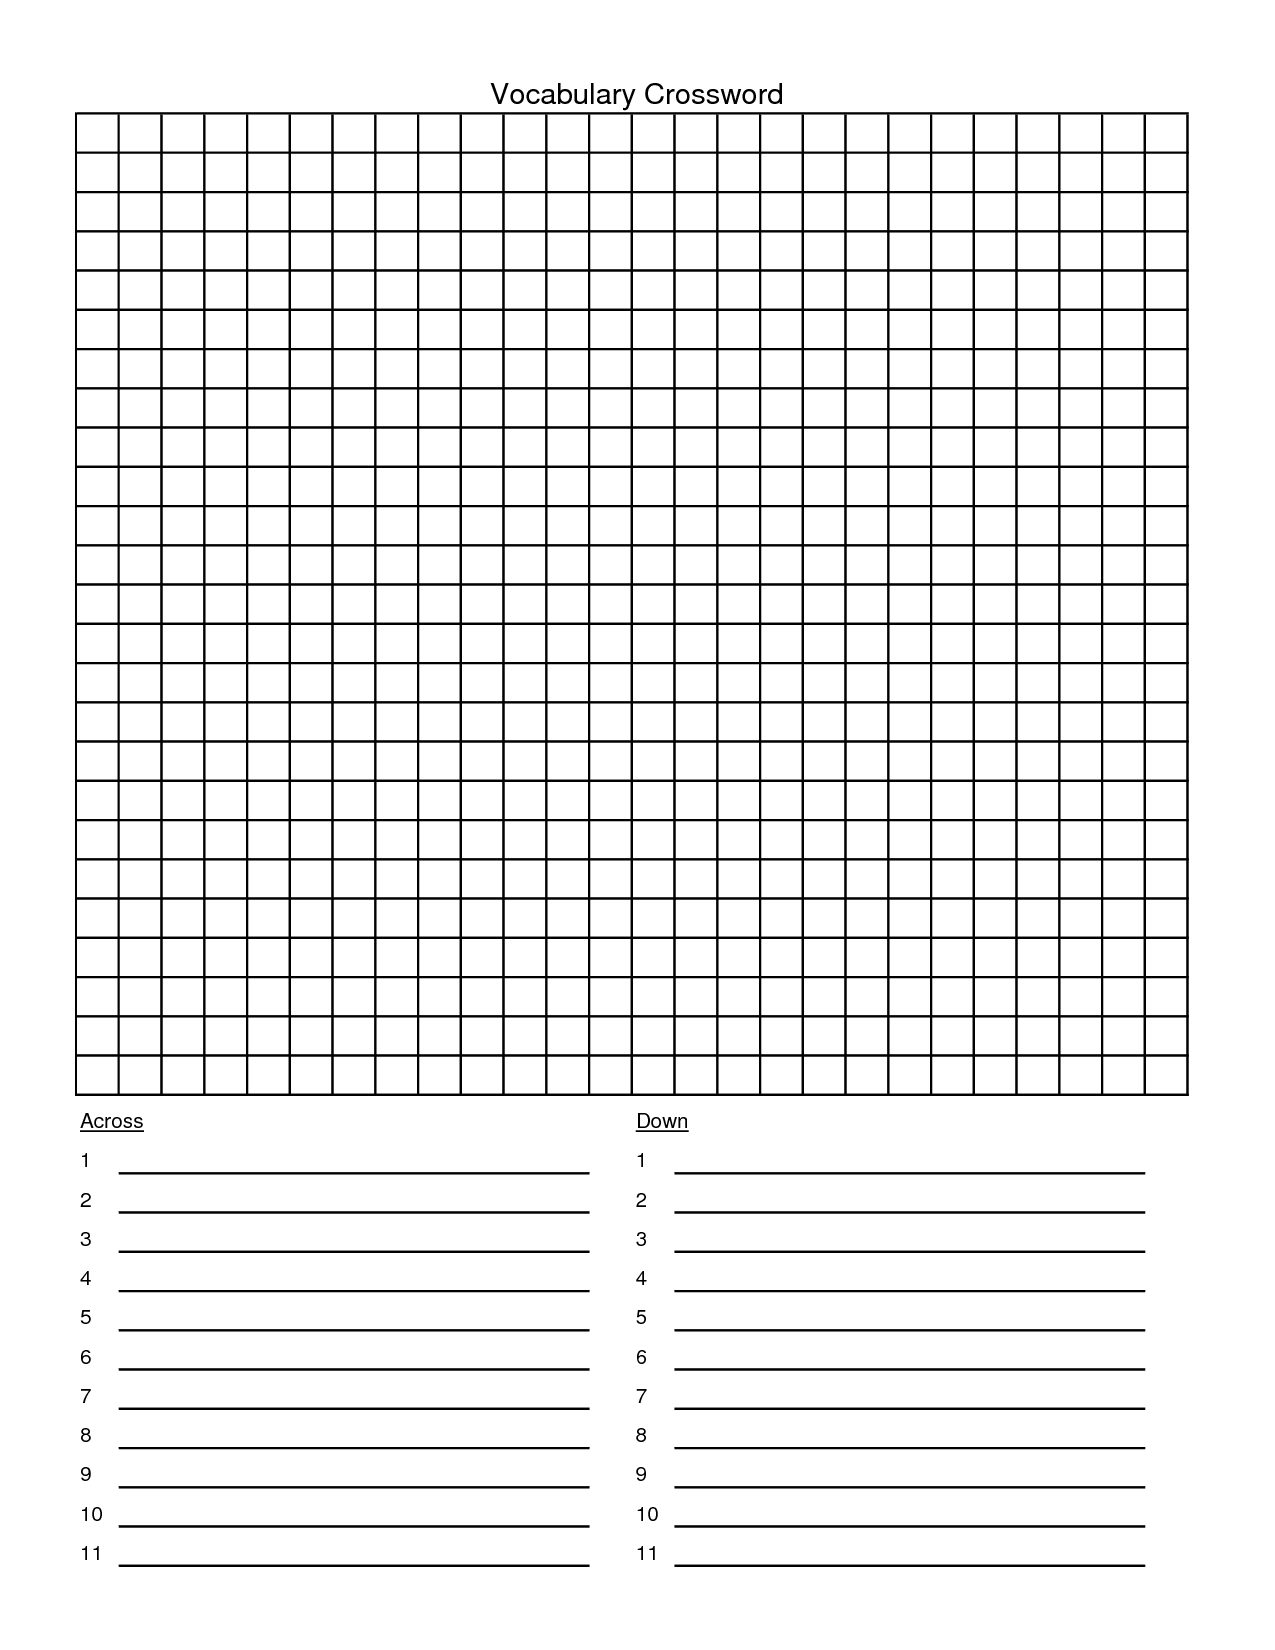 Blank Crossword Template. Blank Crossword Puzzle Clues Template - Printable Blank Crossword Puzzle Grid